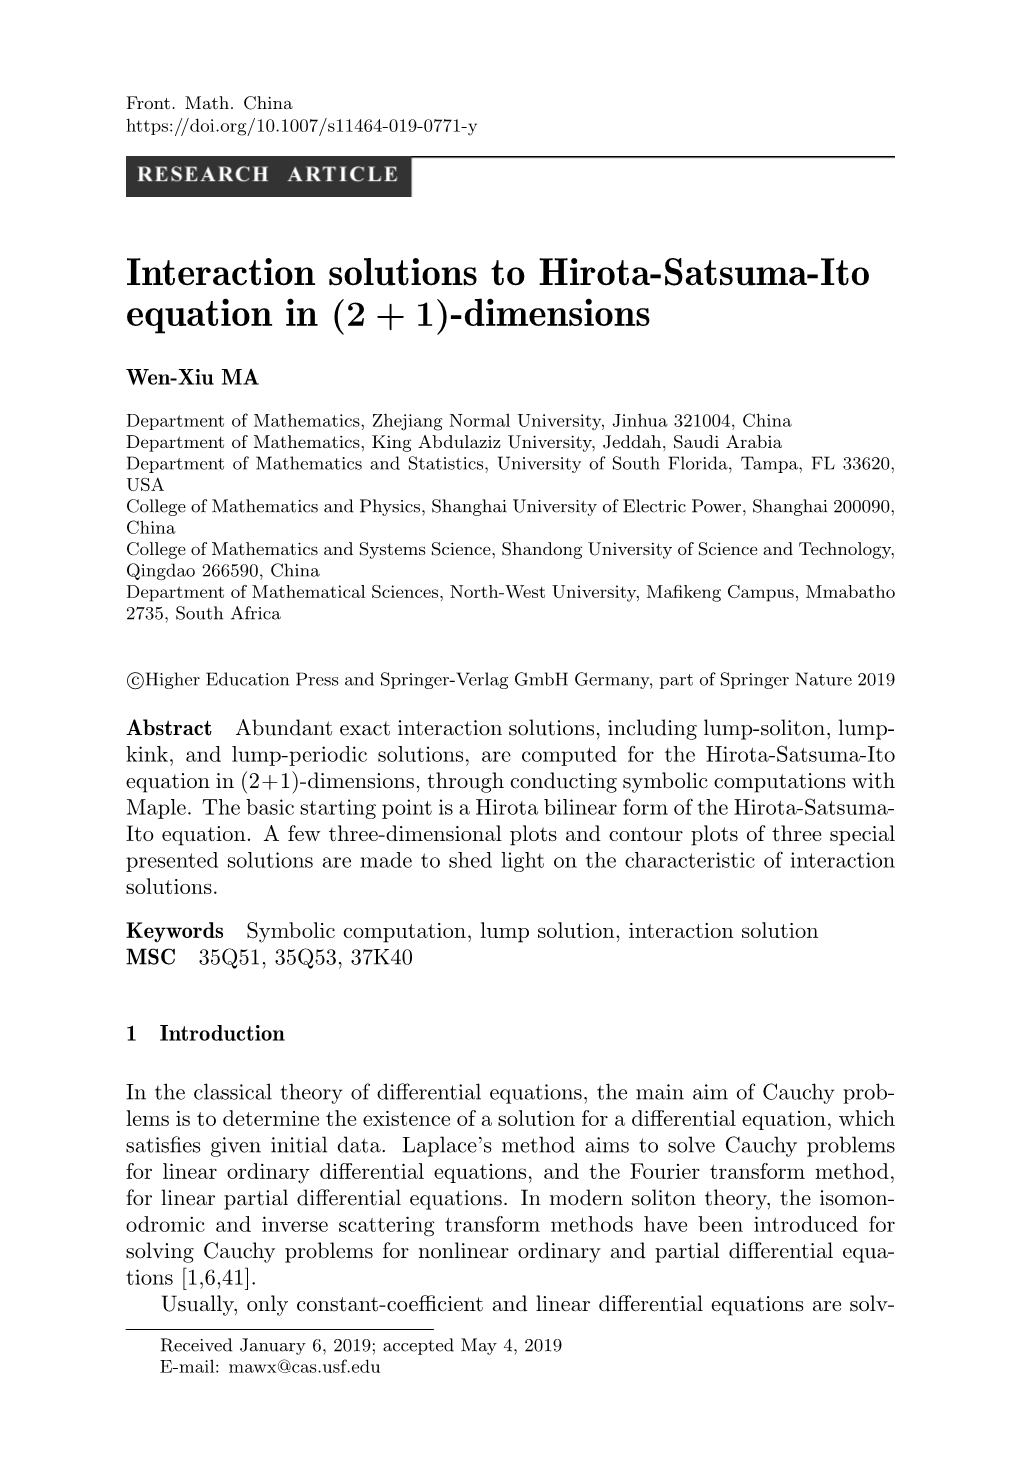 Interaction Solutions to Hirota-Satsuma-Ito Equation in (2 + 1)-Dimensions